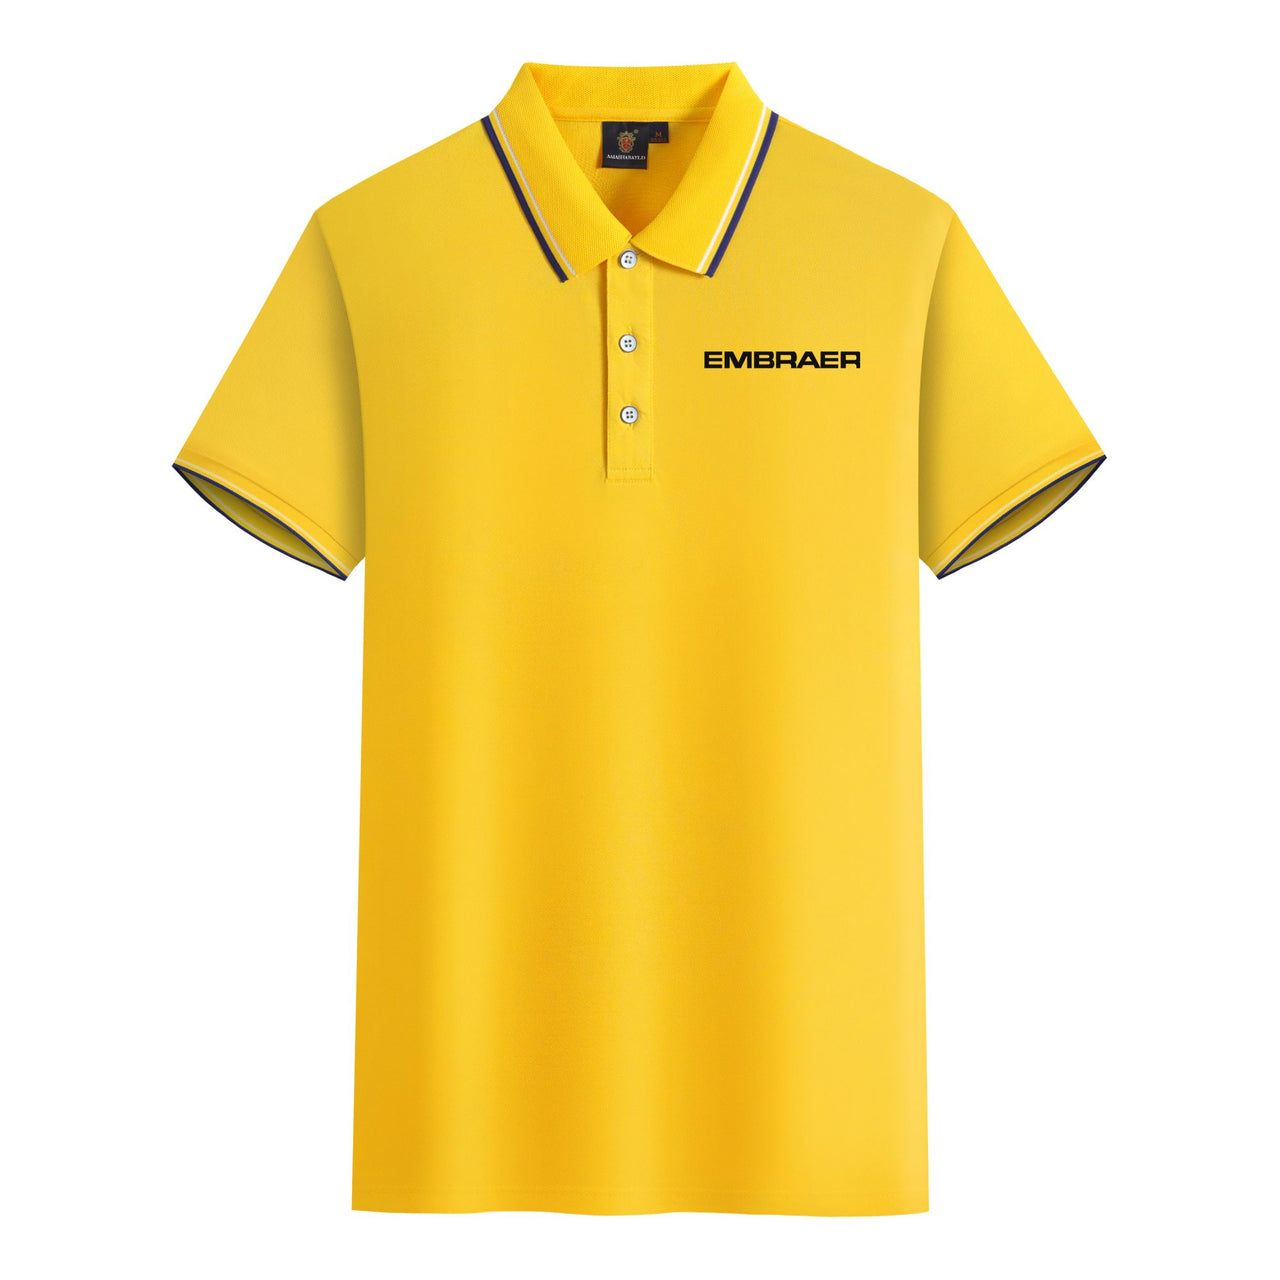 Embraer & Text Designed Stylish Polo T-Shirts